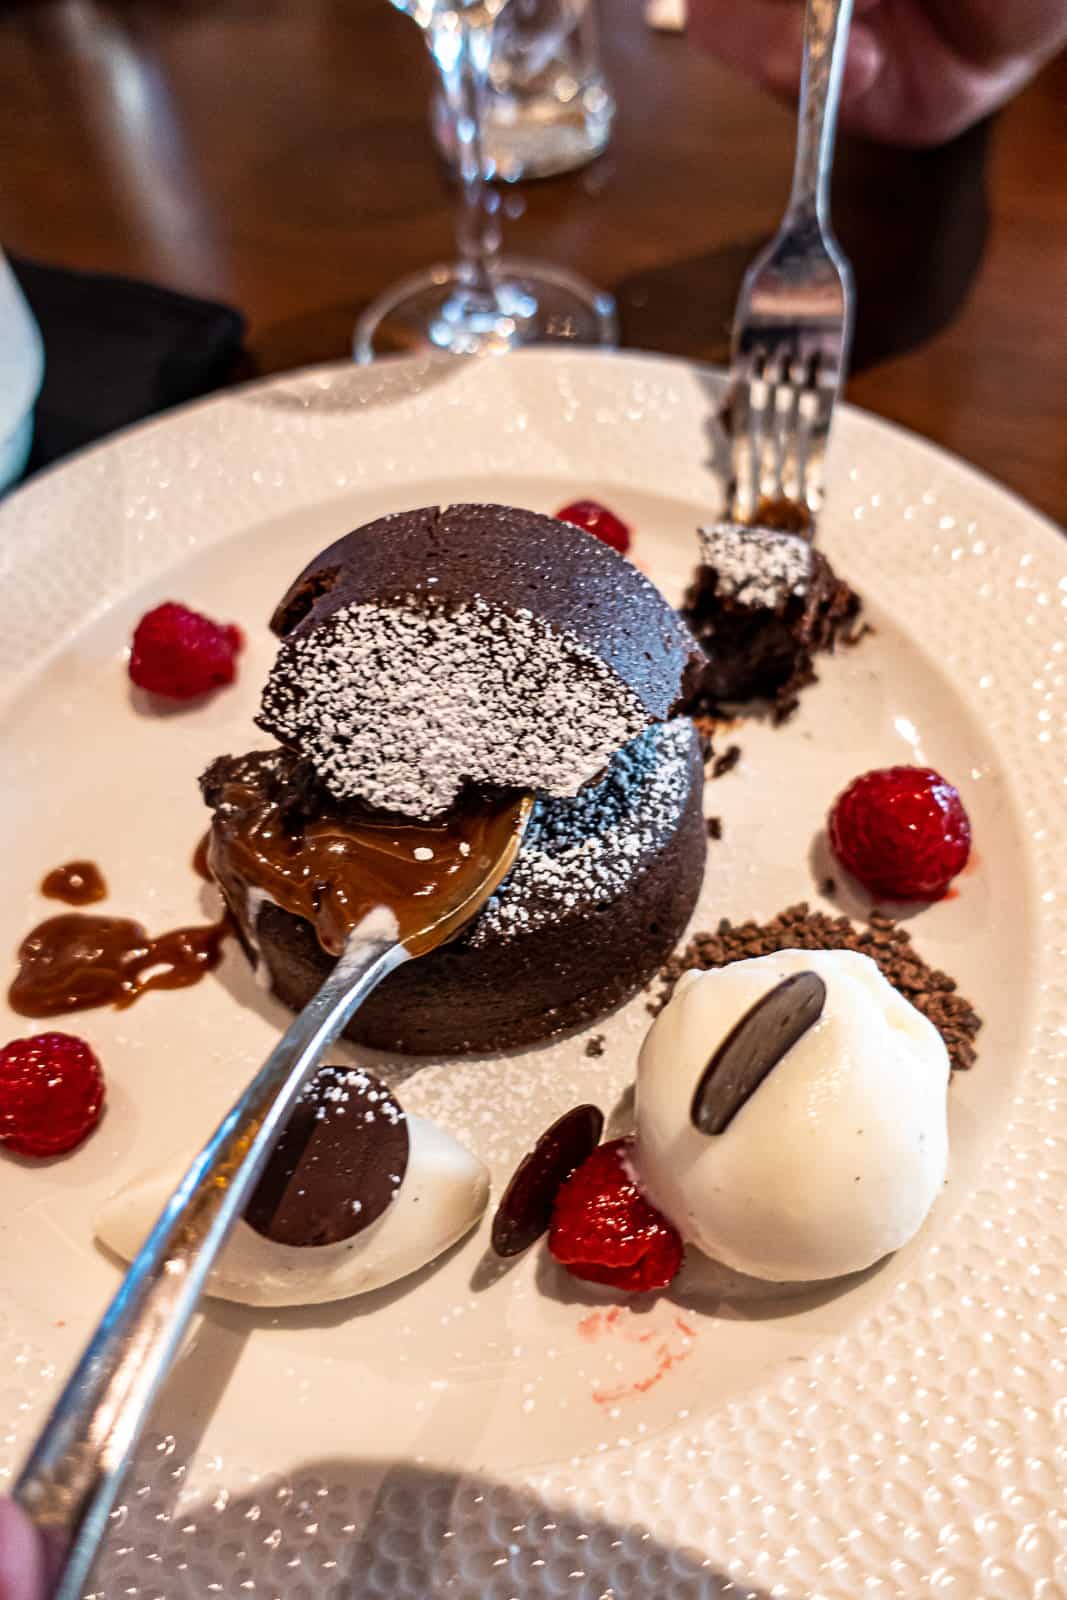 Eating the Chocolate Cake from Dessert Menu at Topolino's Terrace Disney World Restaurant 